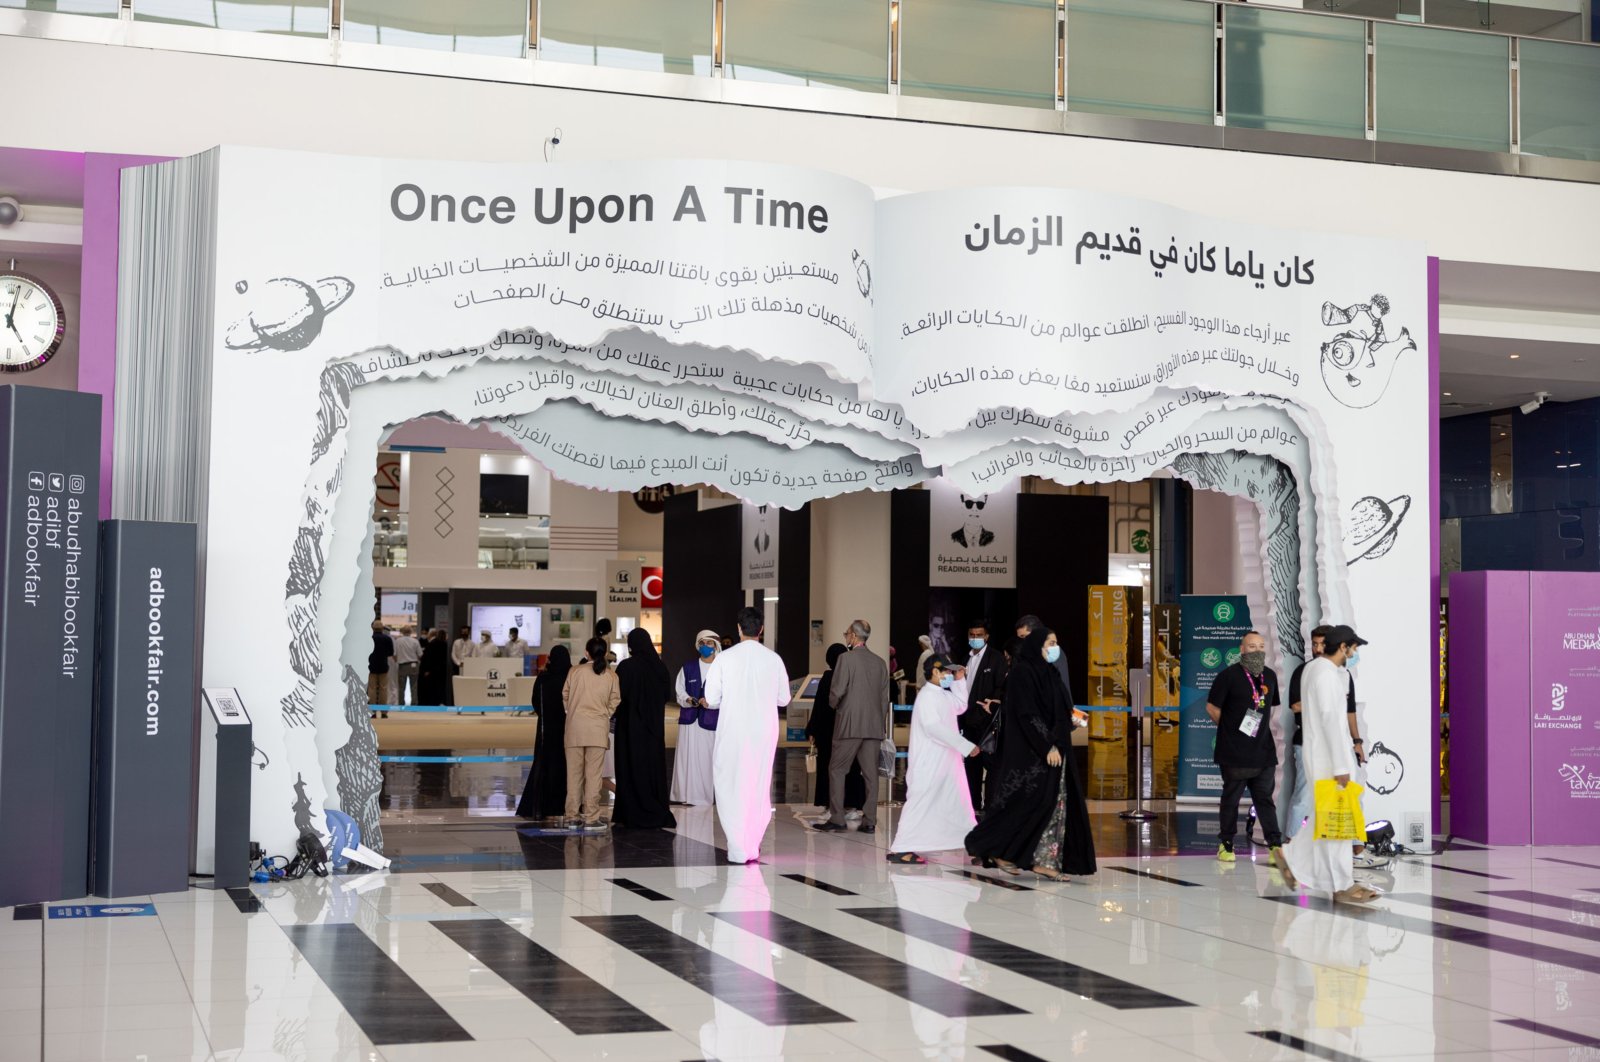 Pameran Buku Abu Dhabi untuk memamerkan budaya Turki sebagai tamu kehormatan